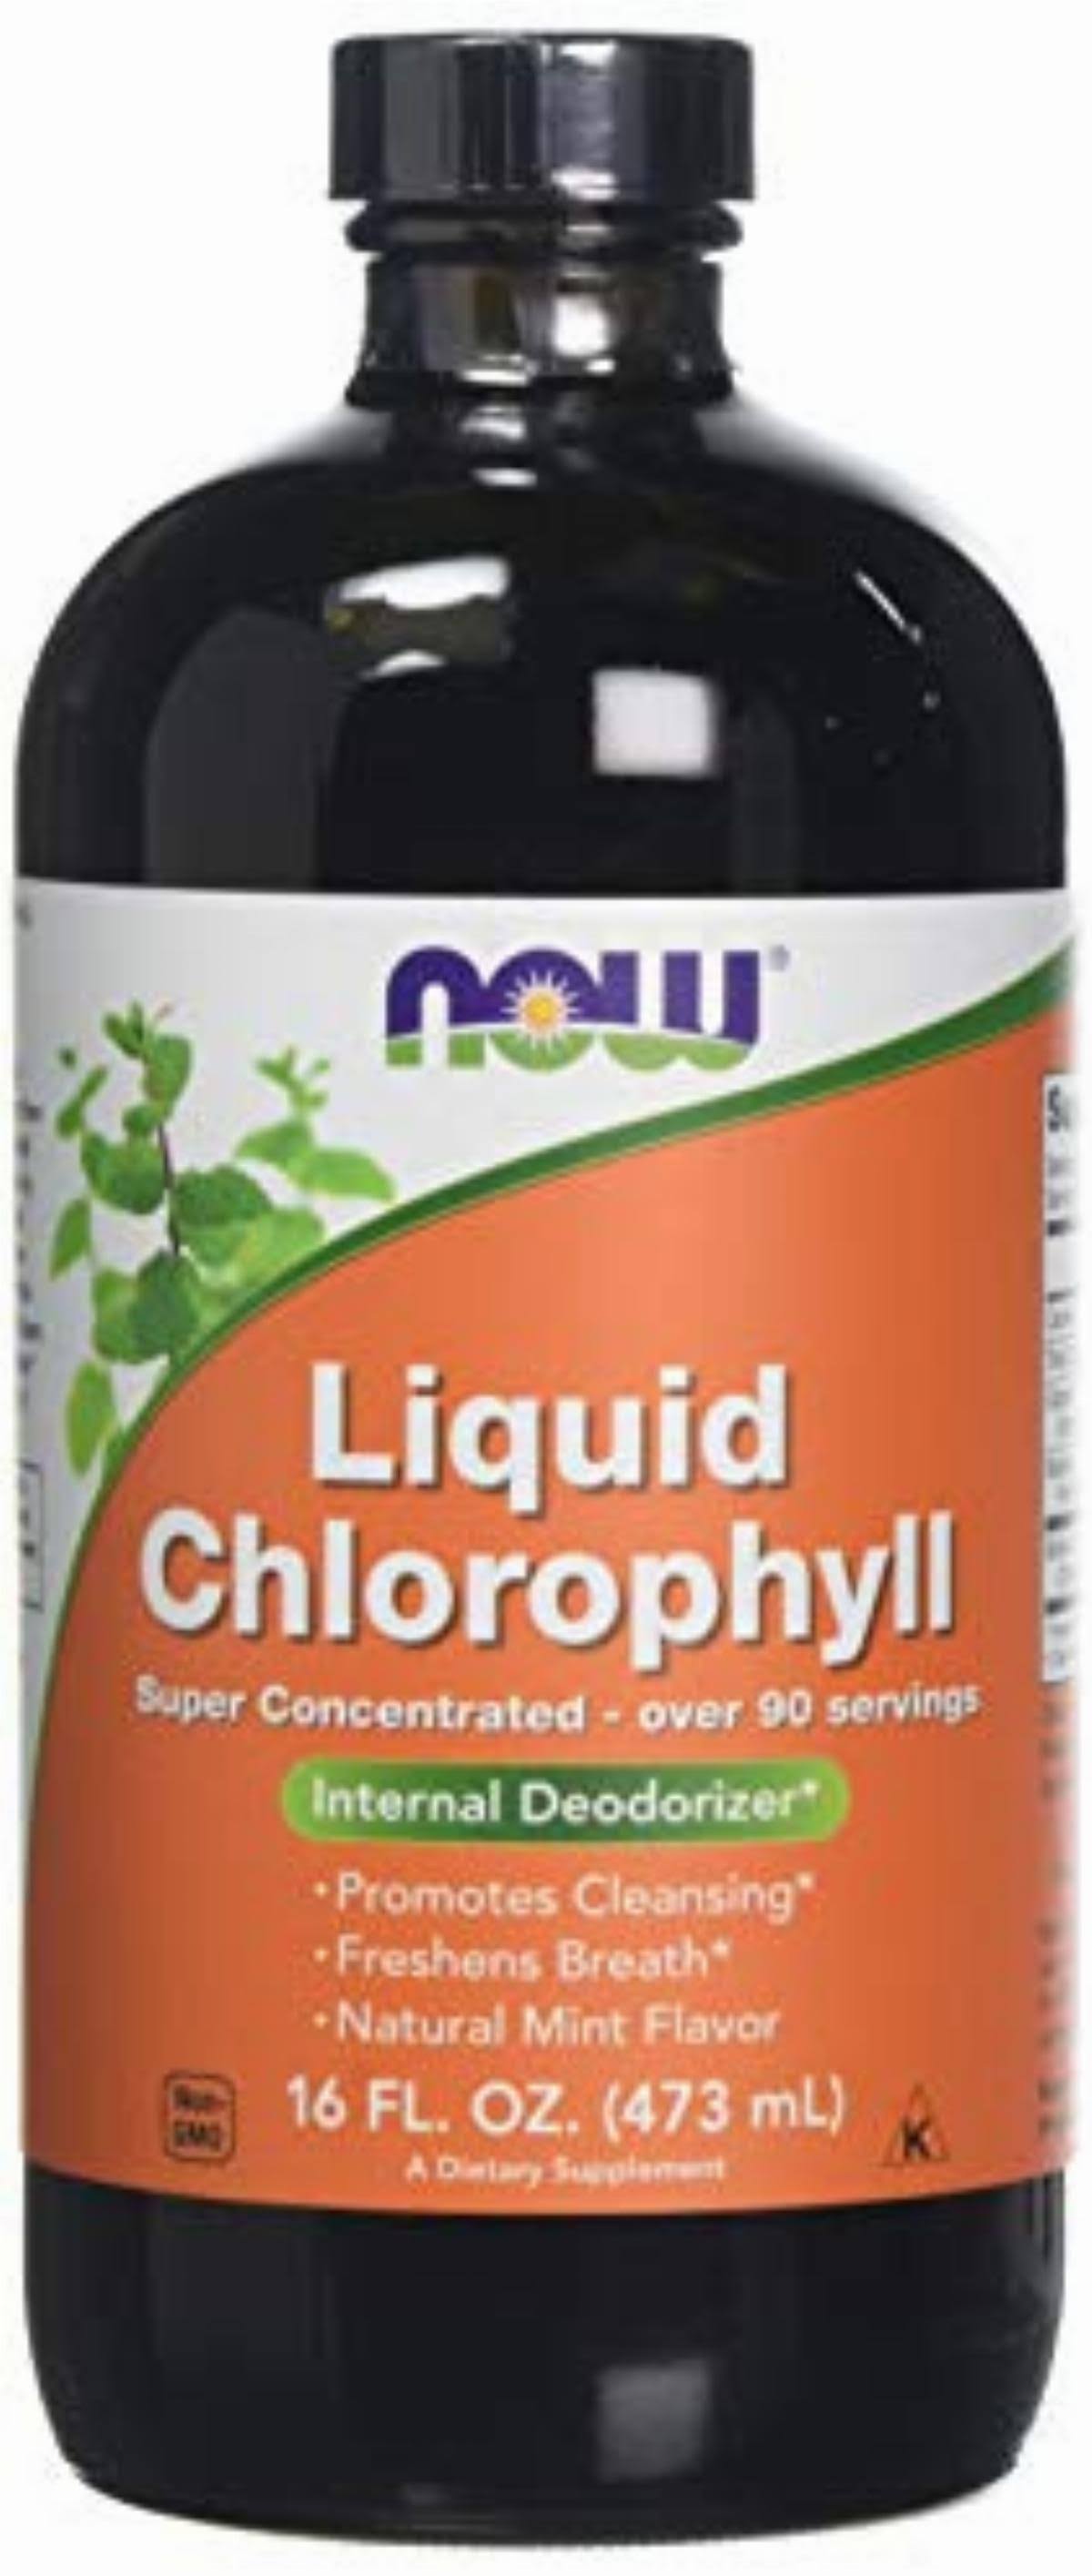 Now Foods Liquid Chlorophyll - Mint, 473ml